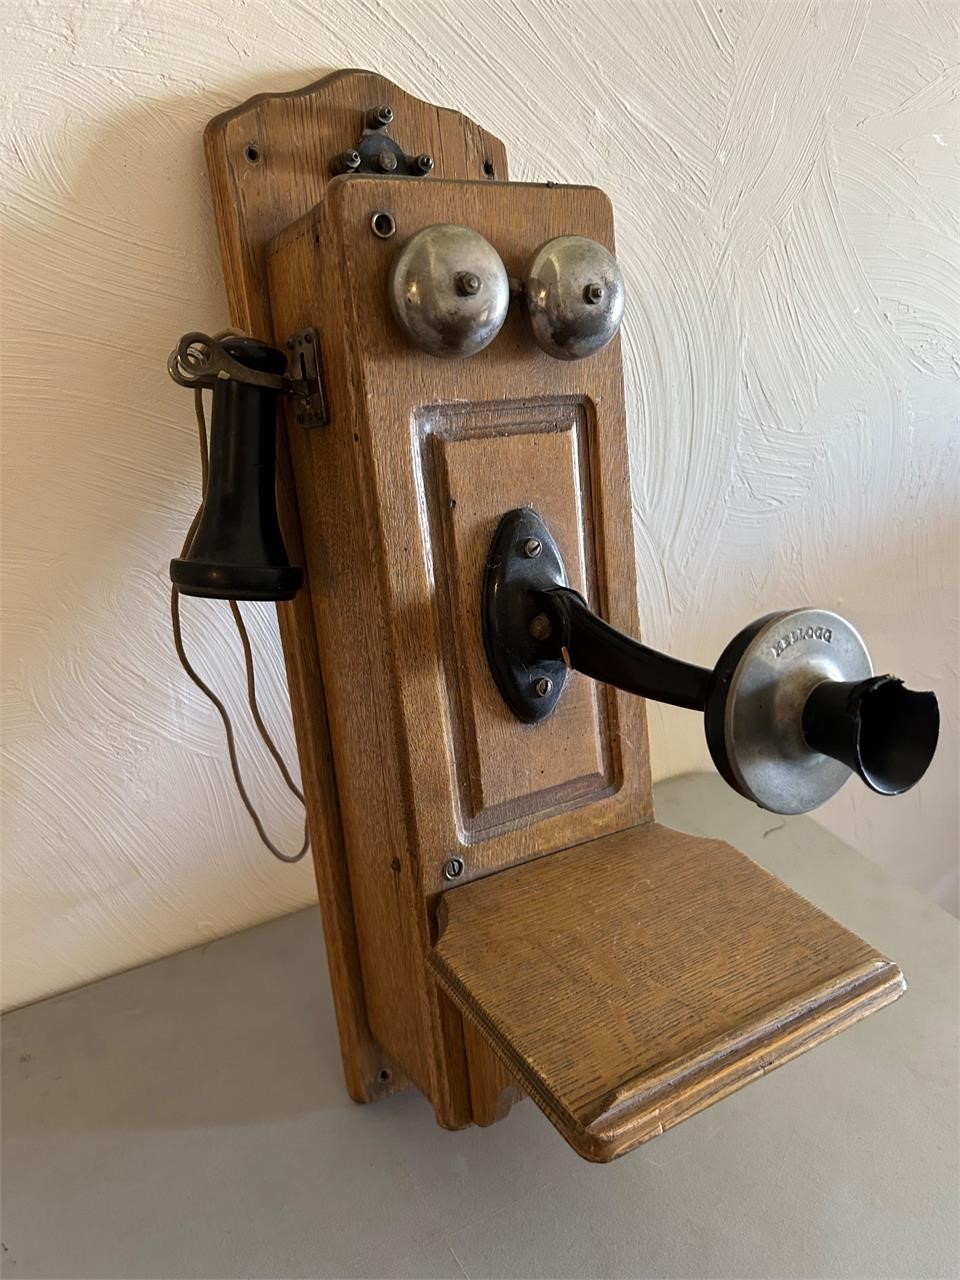 Antique Kellogg Crank Wall Phone